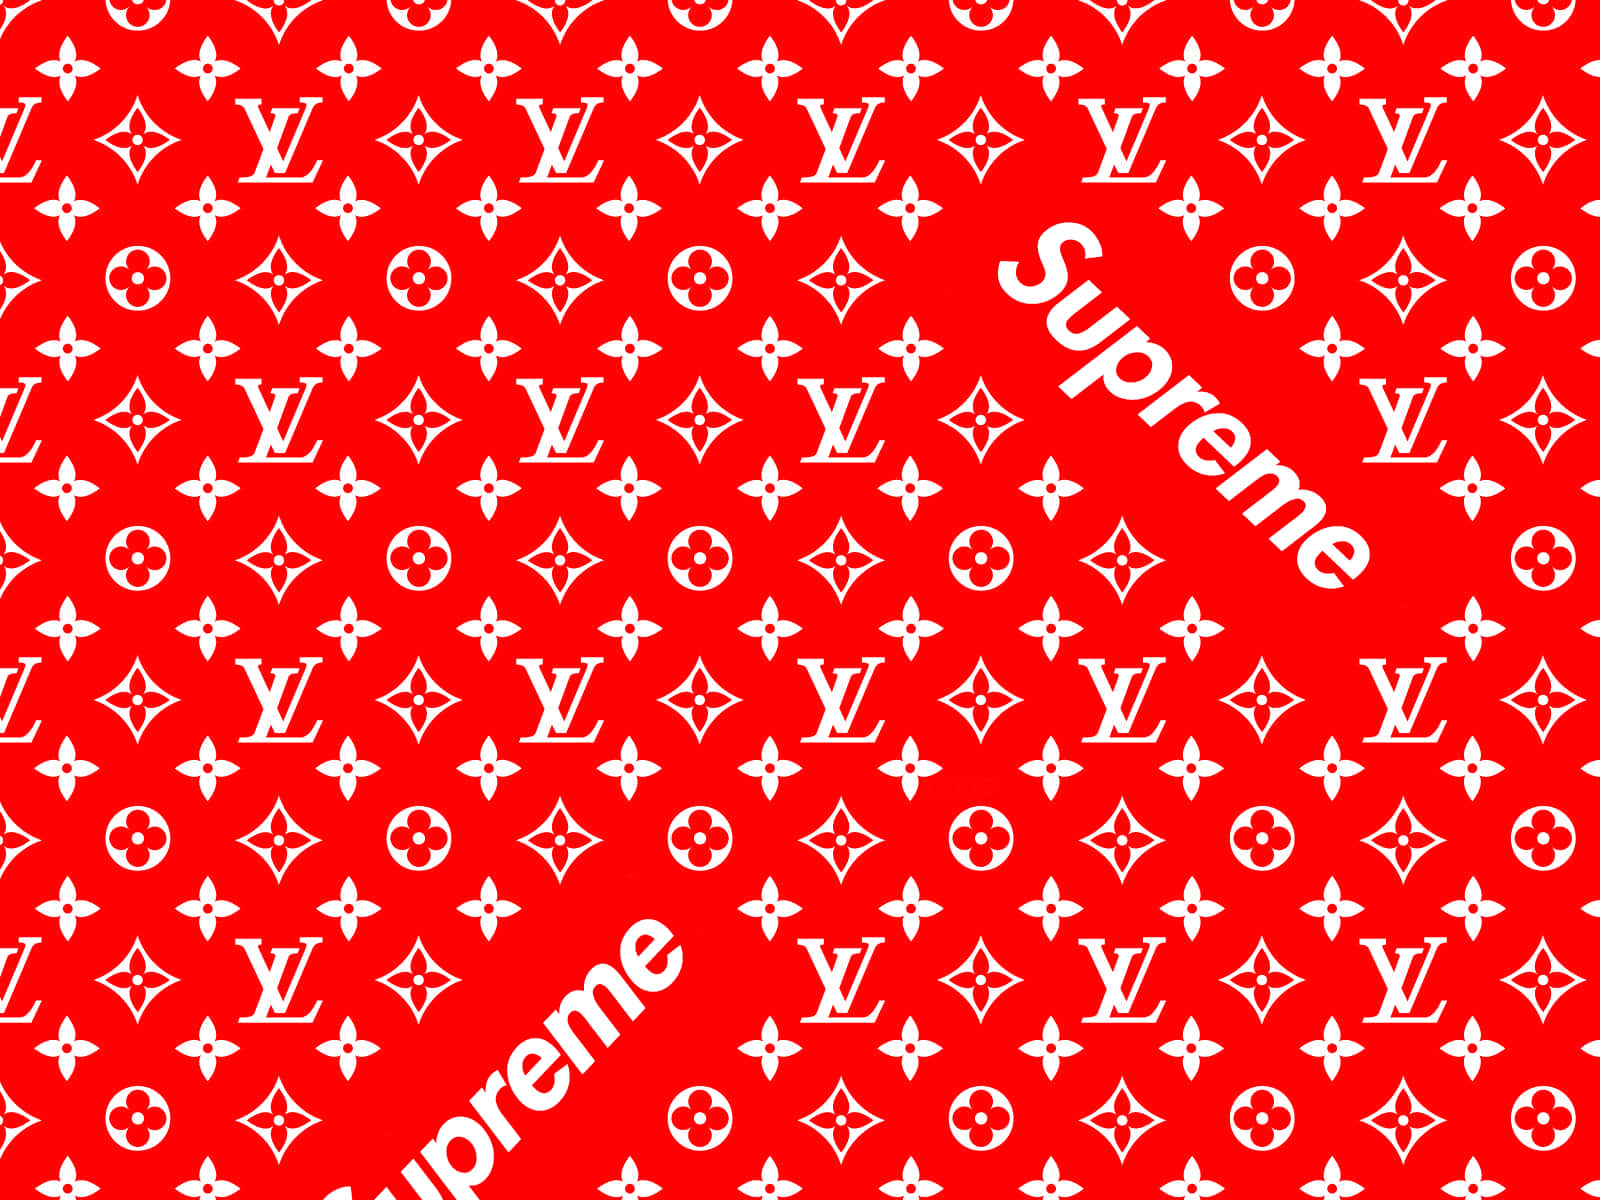 red supreme pattern